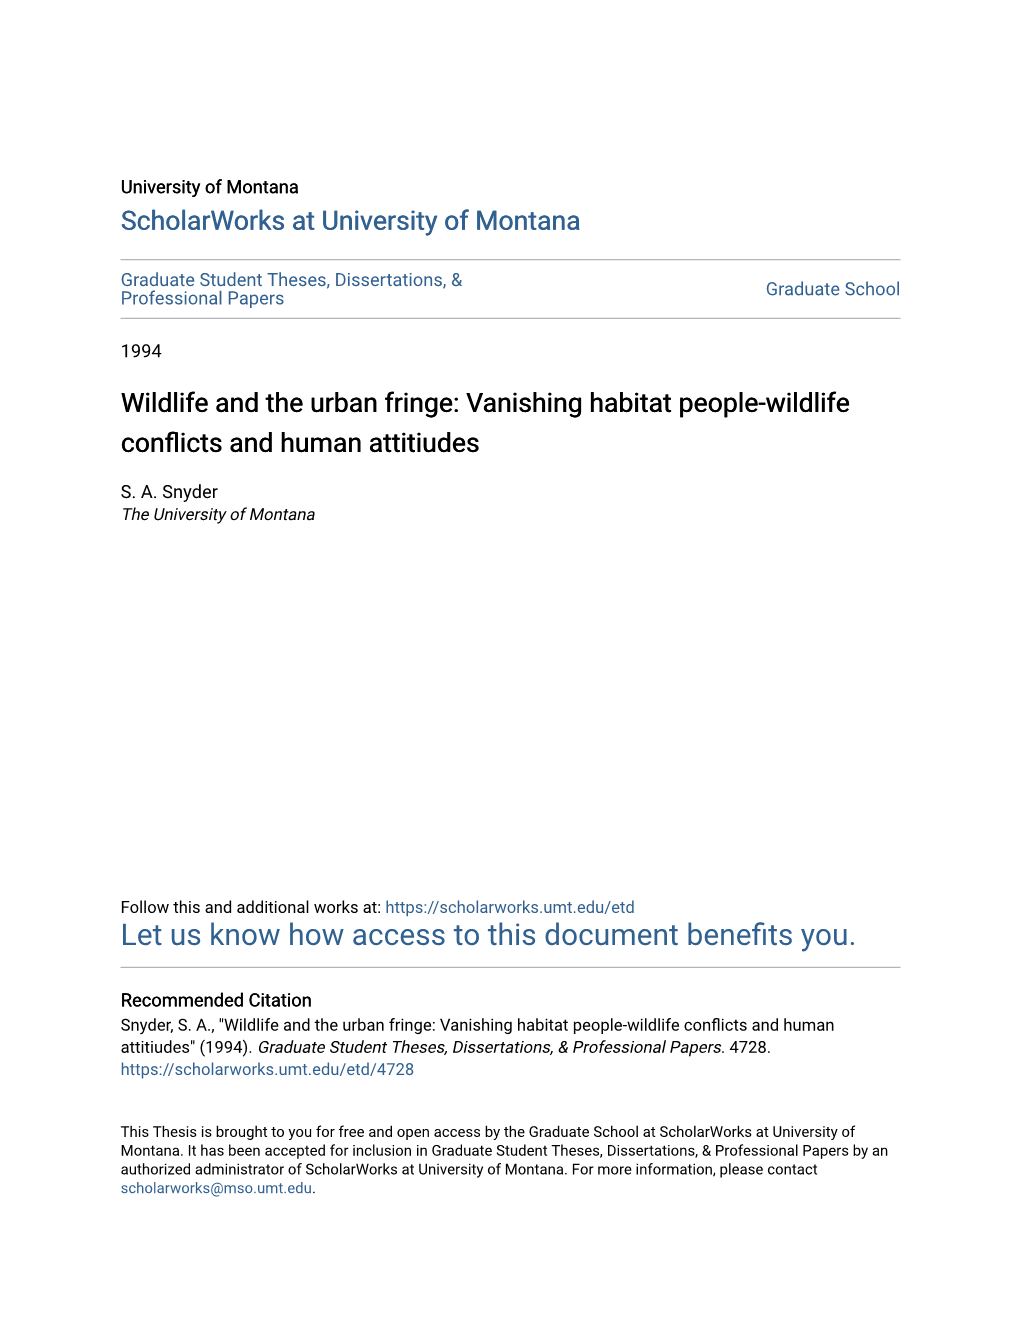 Vanishing Habitat People-Wildlife Conflicts and Human Attitiudes